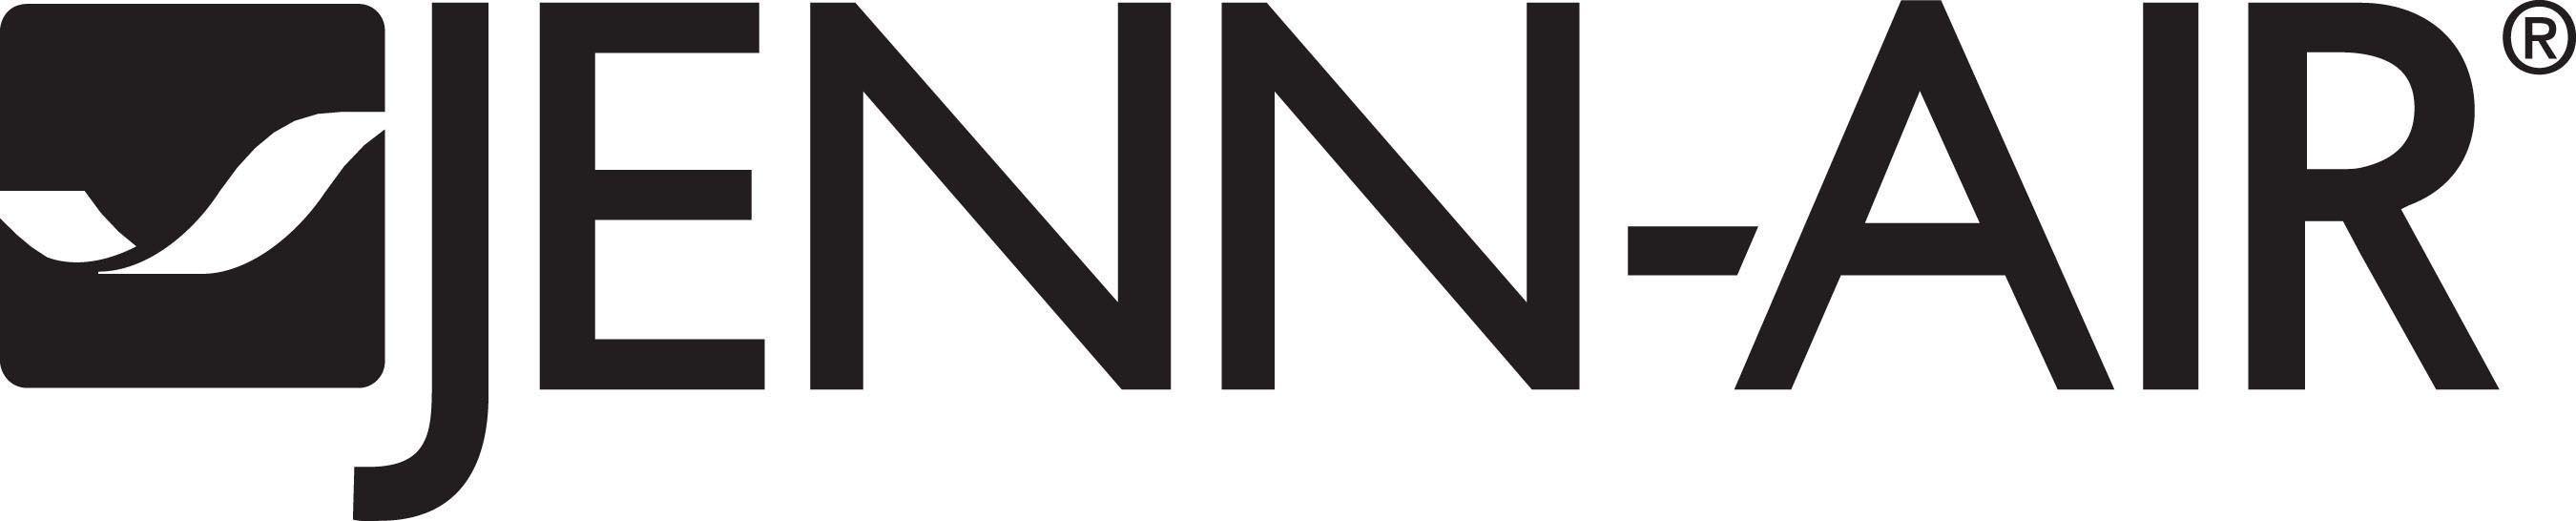 Jenn-Air Logo - Jenn-Air To Showcase Innovation As Sponsor Of Architectural Digest ...